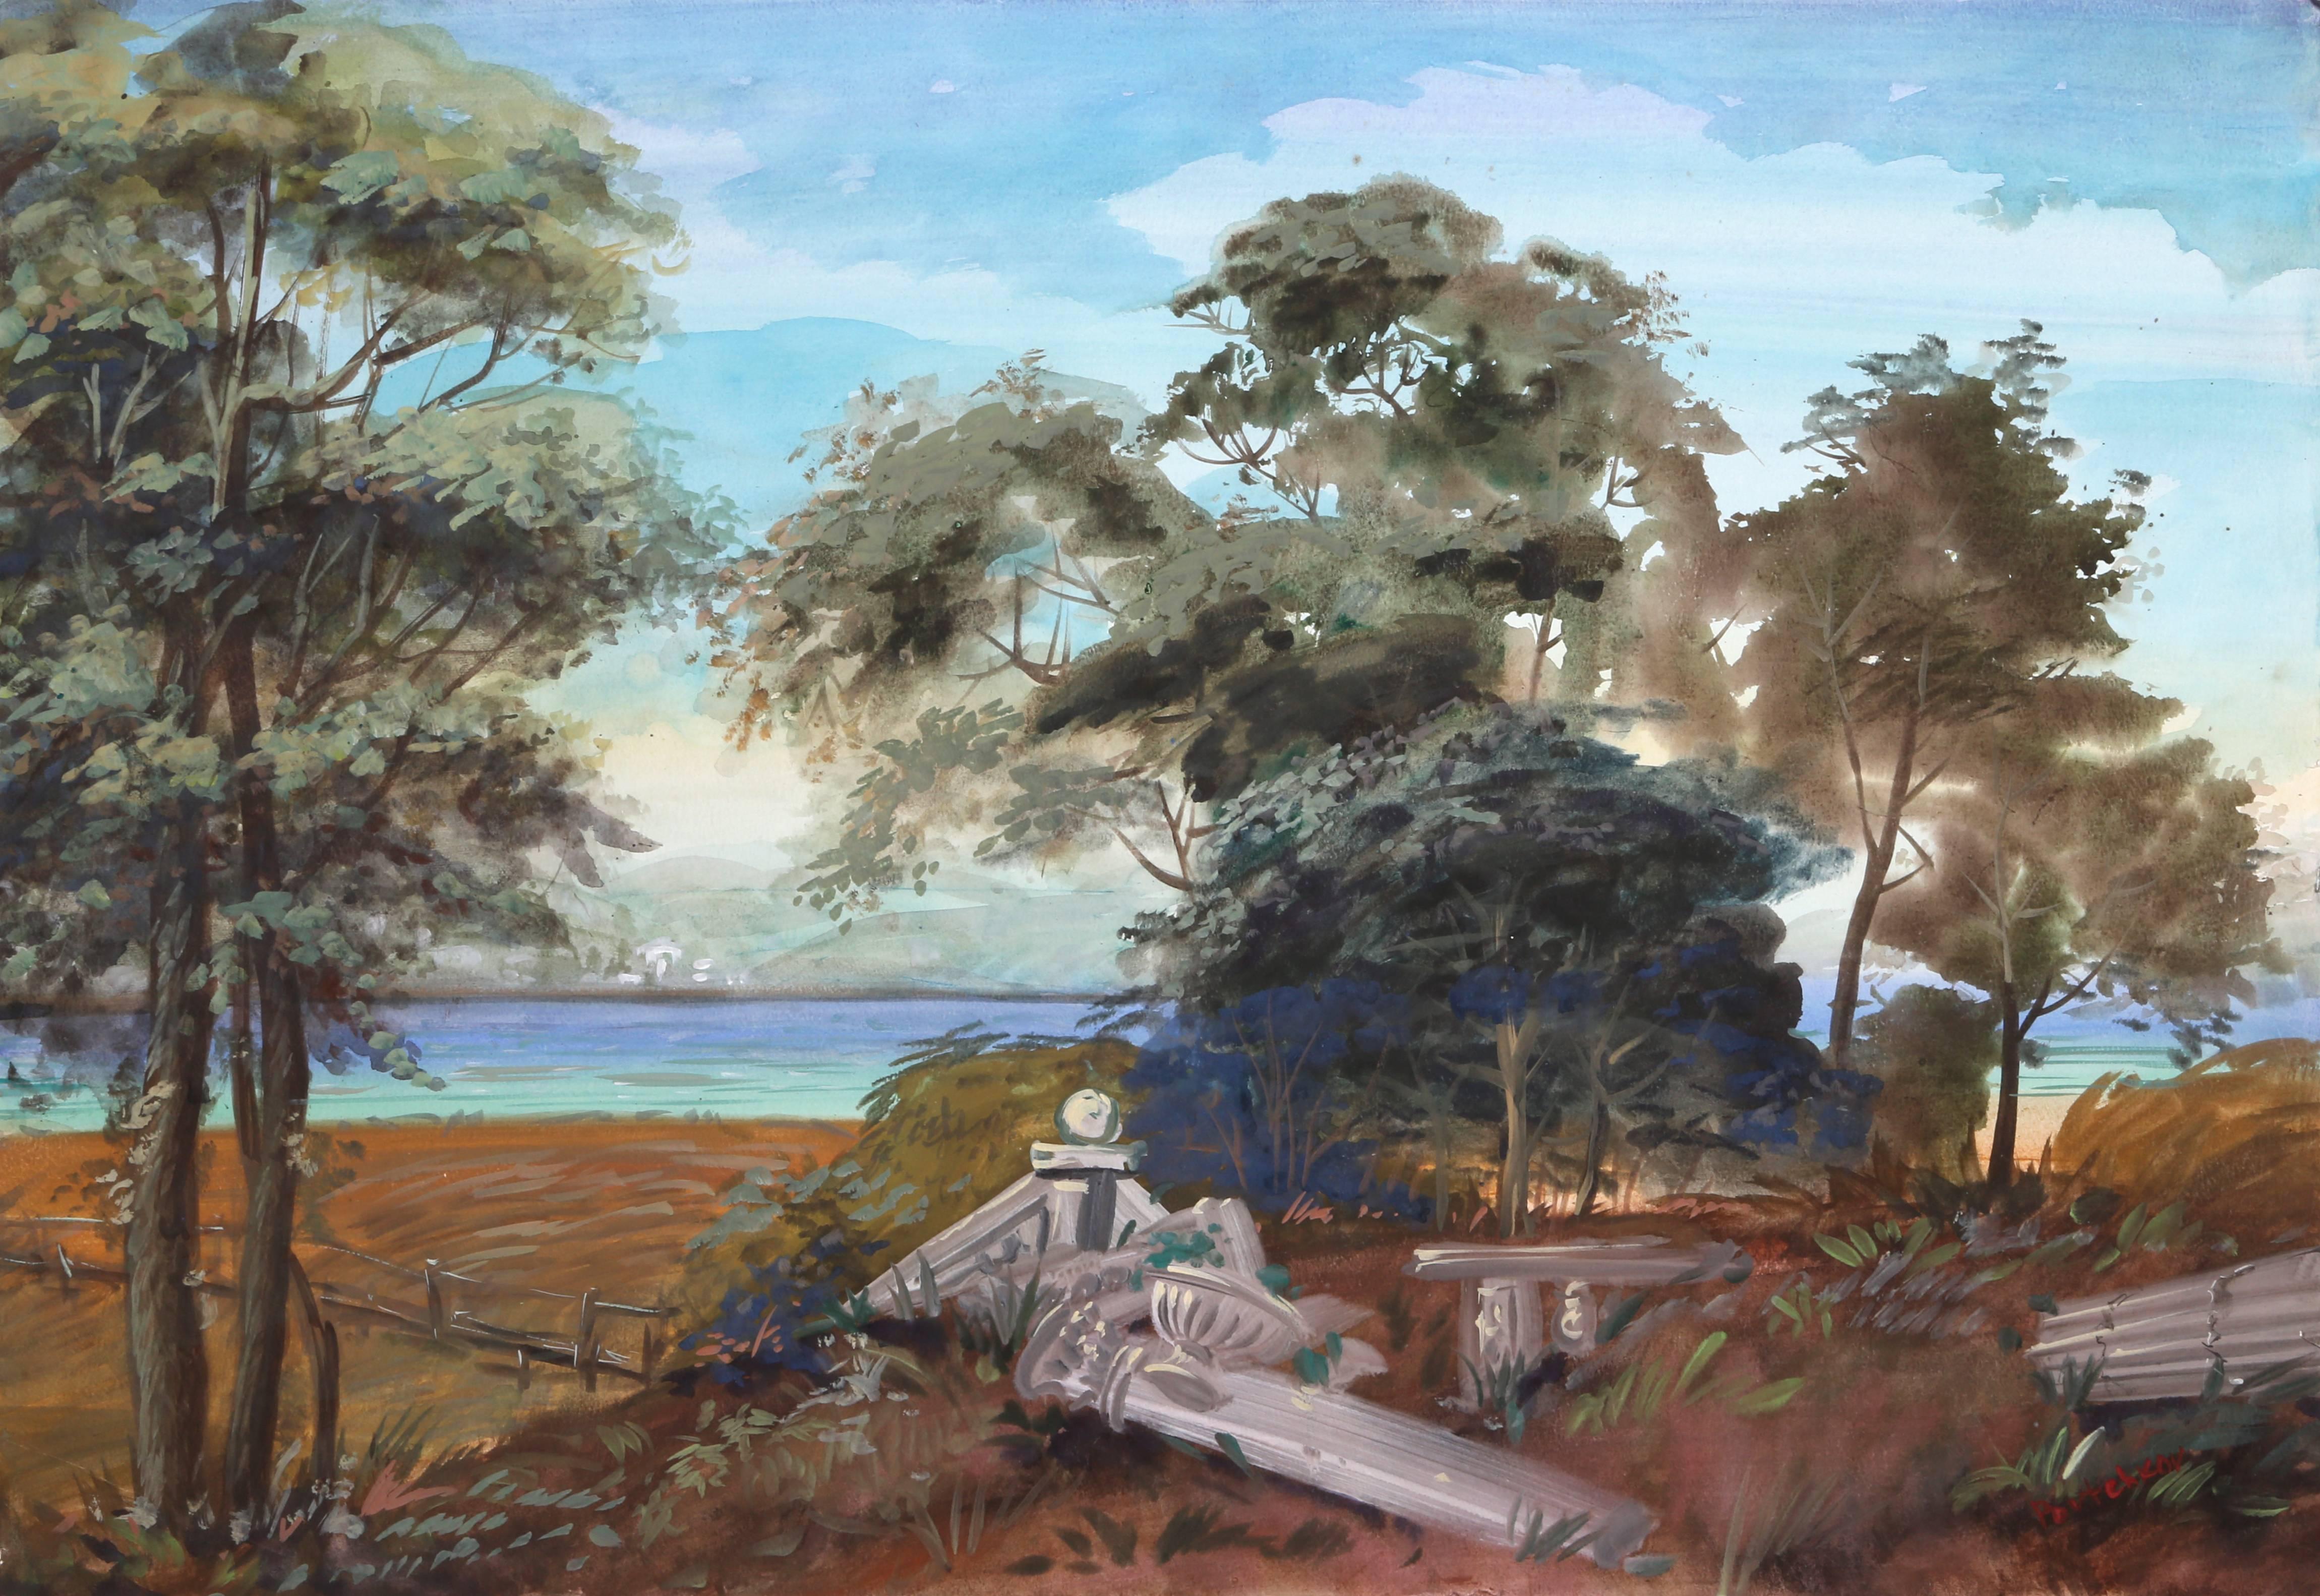 Vladimir Poutchkov Landscape Painting - Landscape with Ruins, Large Painting by Poutchkov